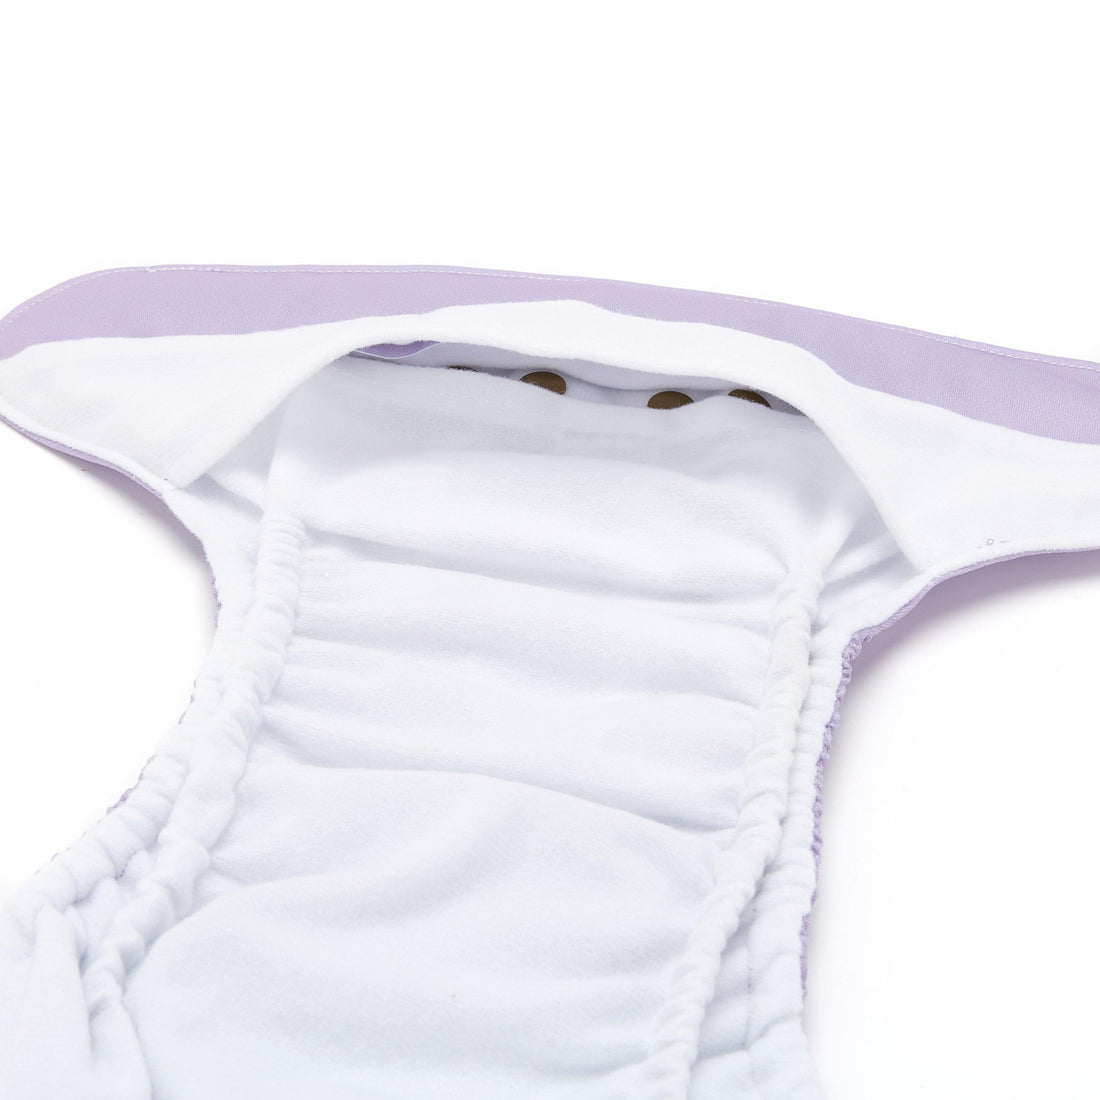 Fudgey TRIMS™ Pocket Nappy - Lilac - Fudgey Pants